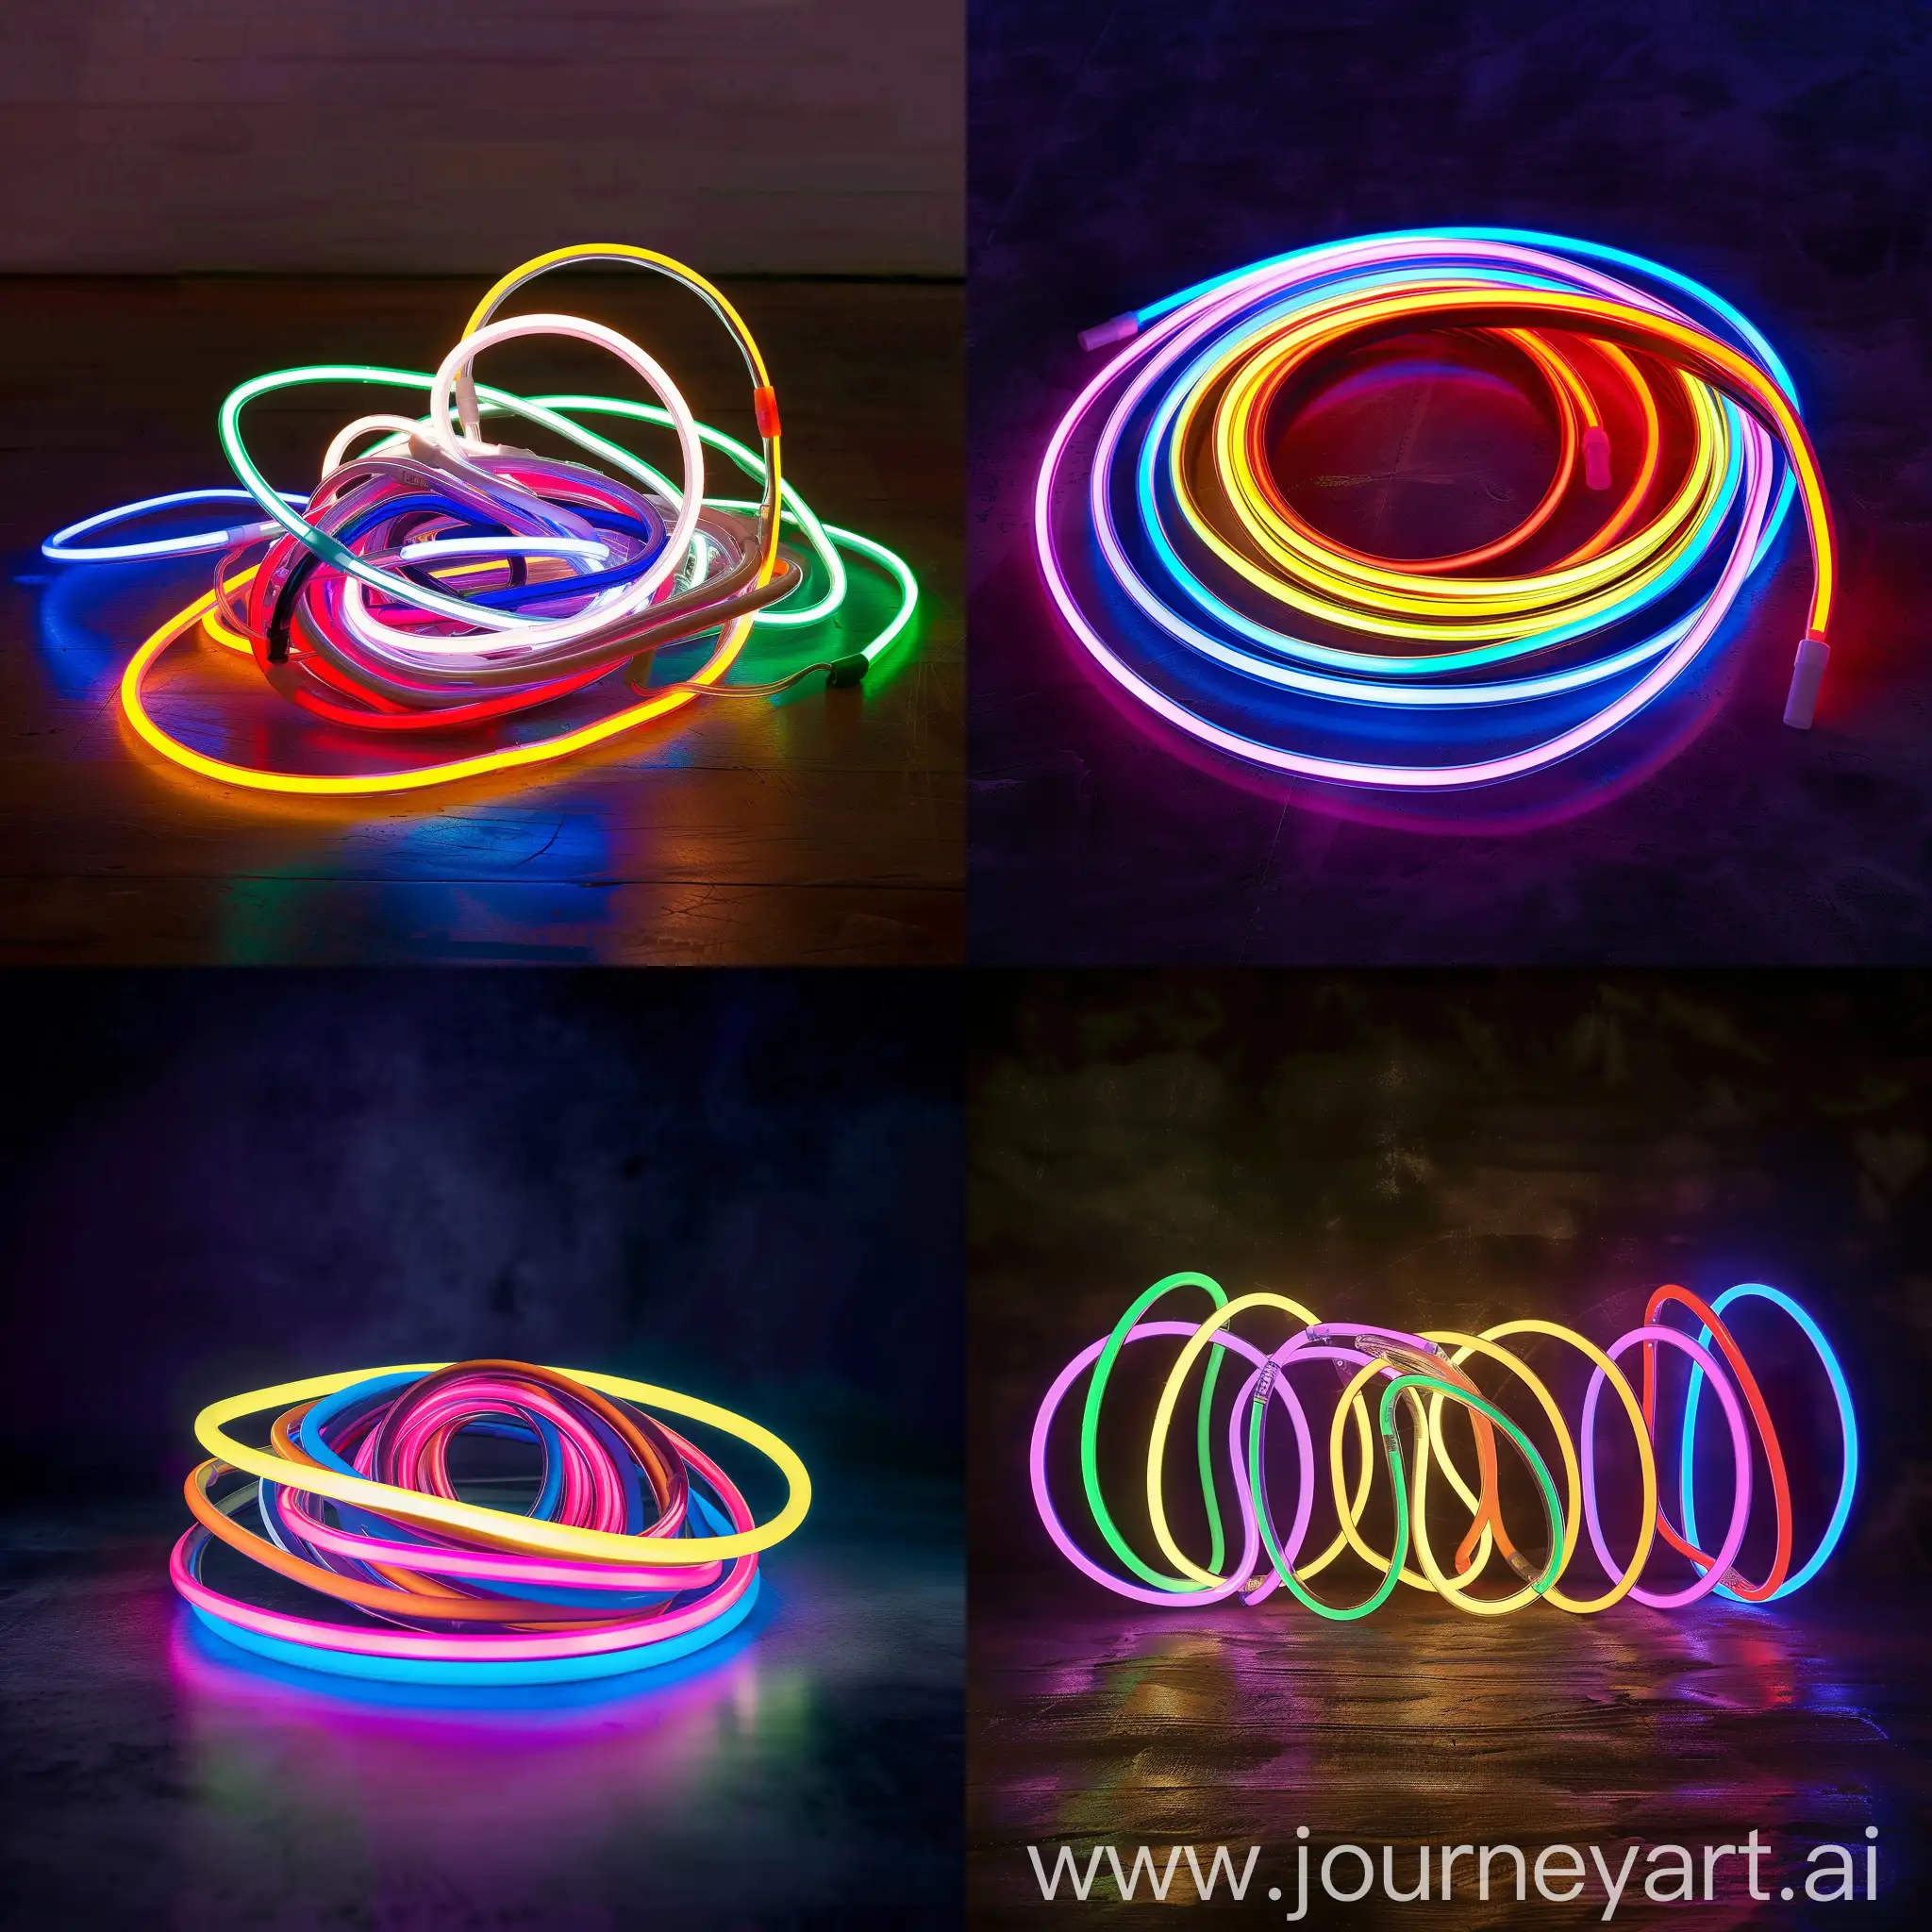 Vibrant-Flexible-Neon-Art-Mesmerizing-Light-Display